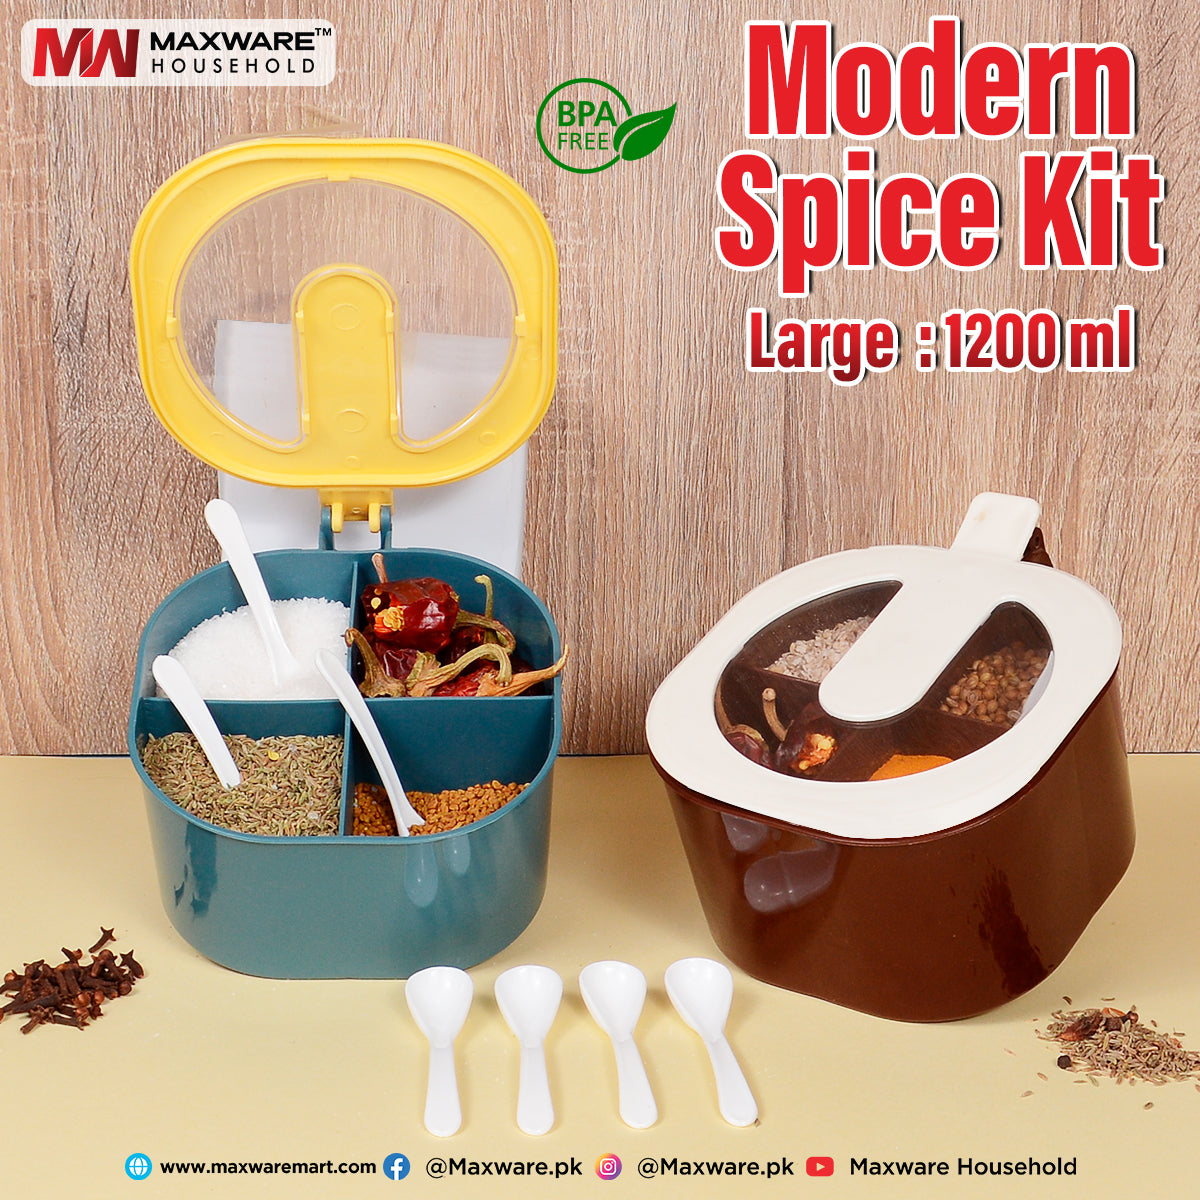 Modern Spice Kit Small (1000 ml)